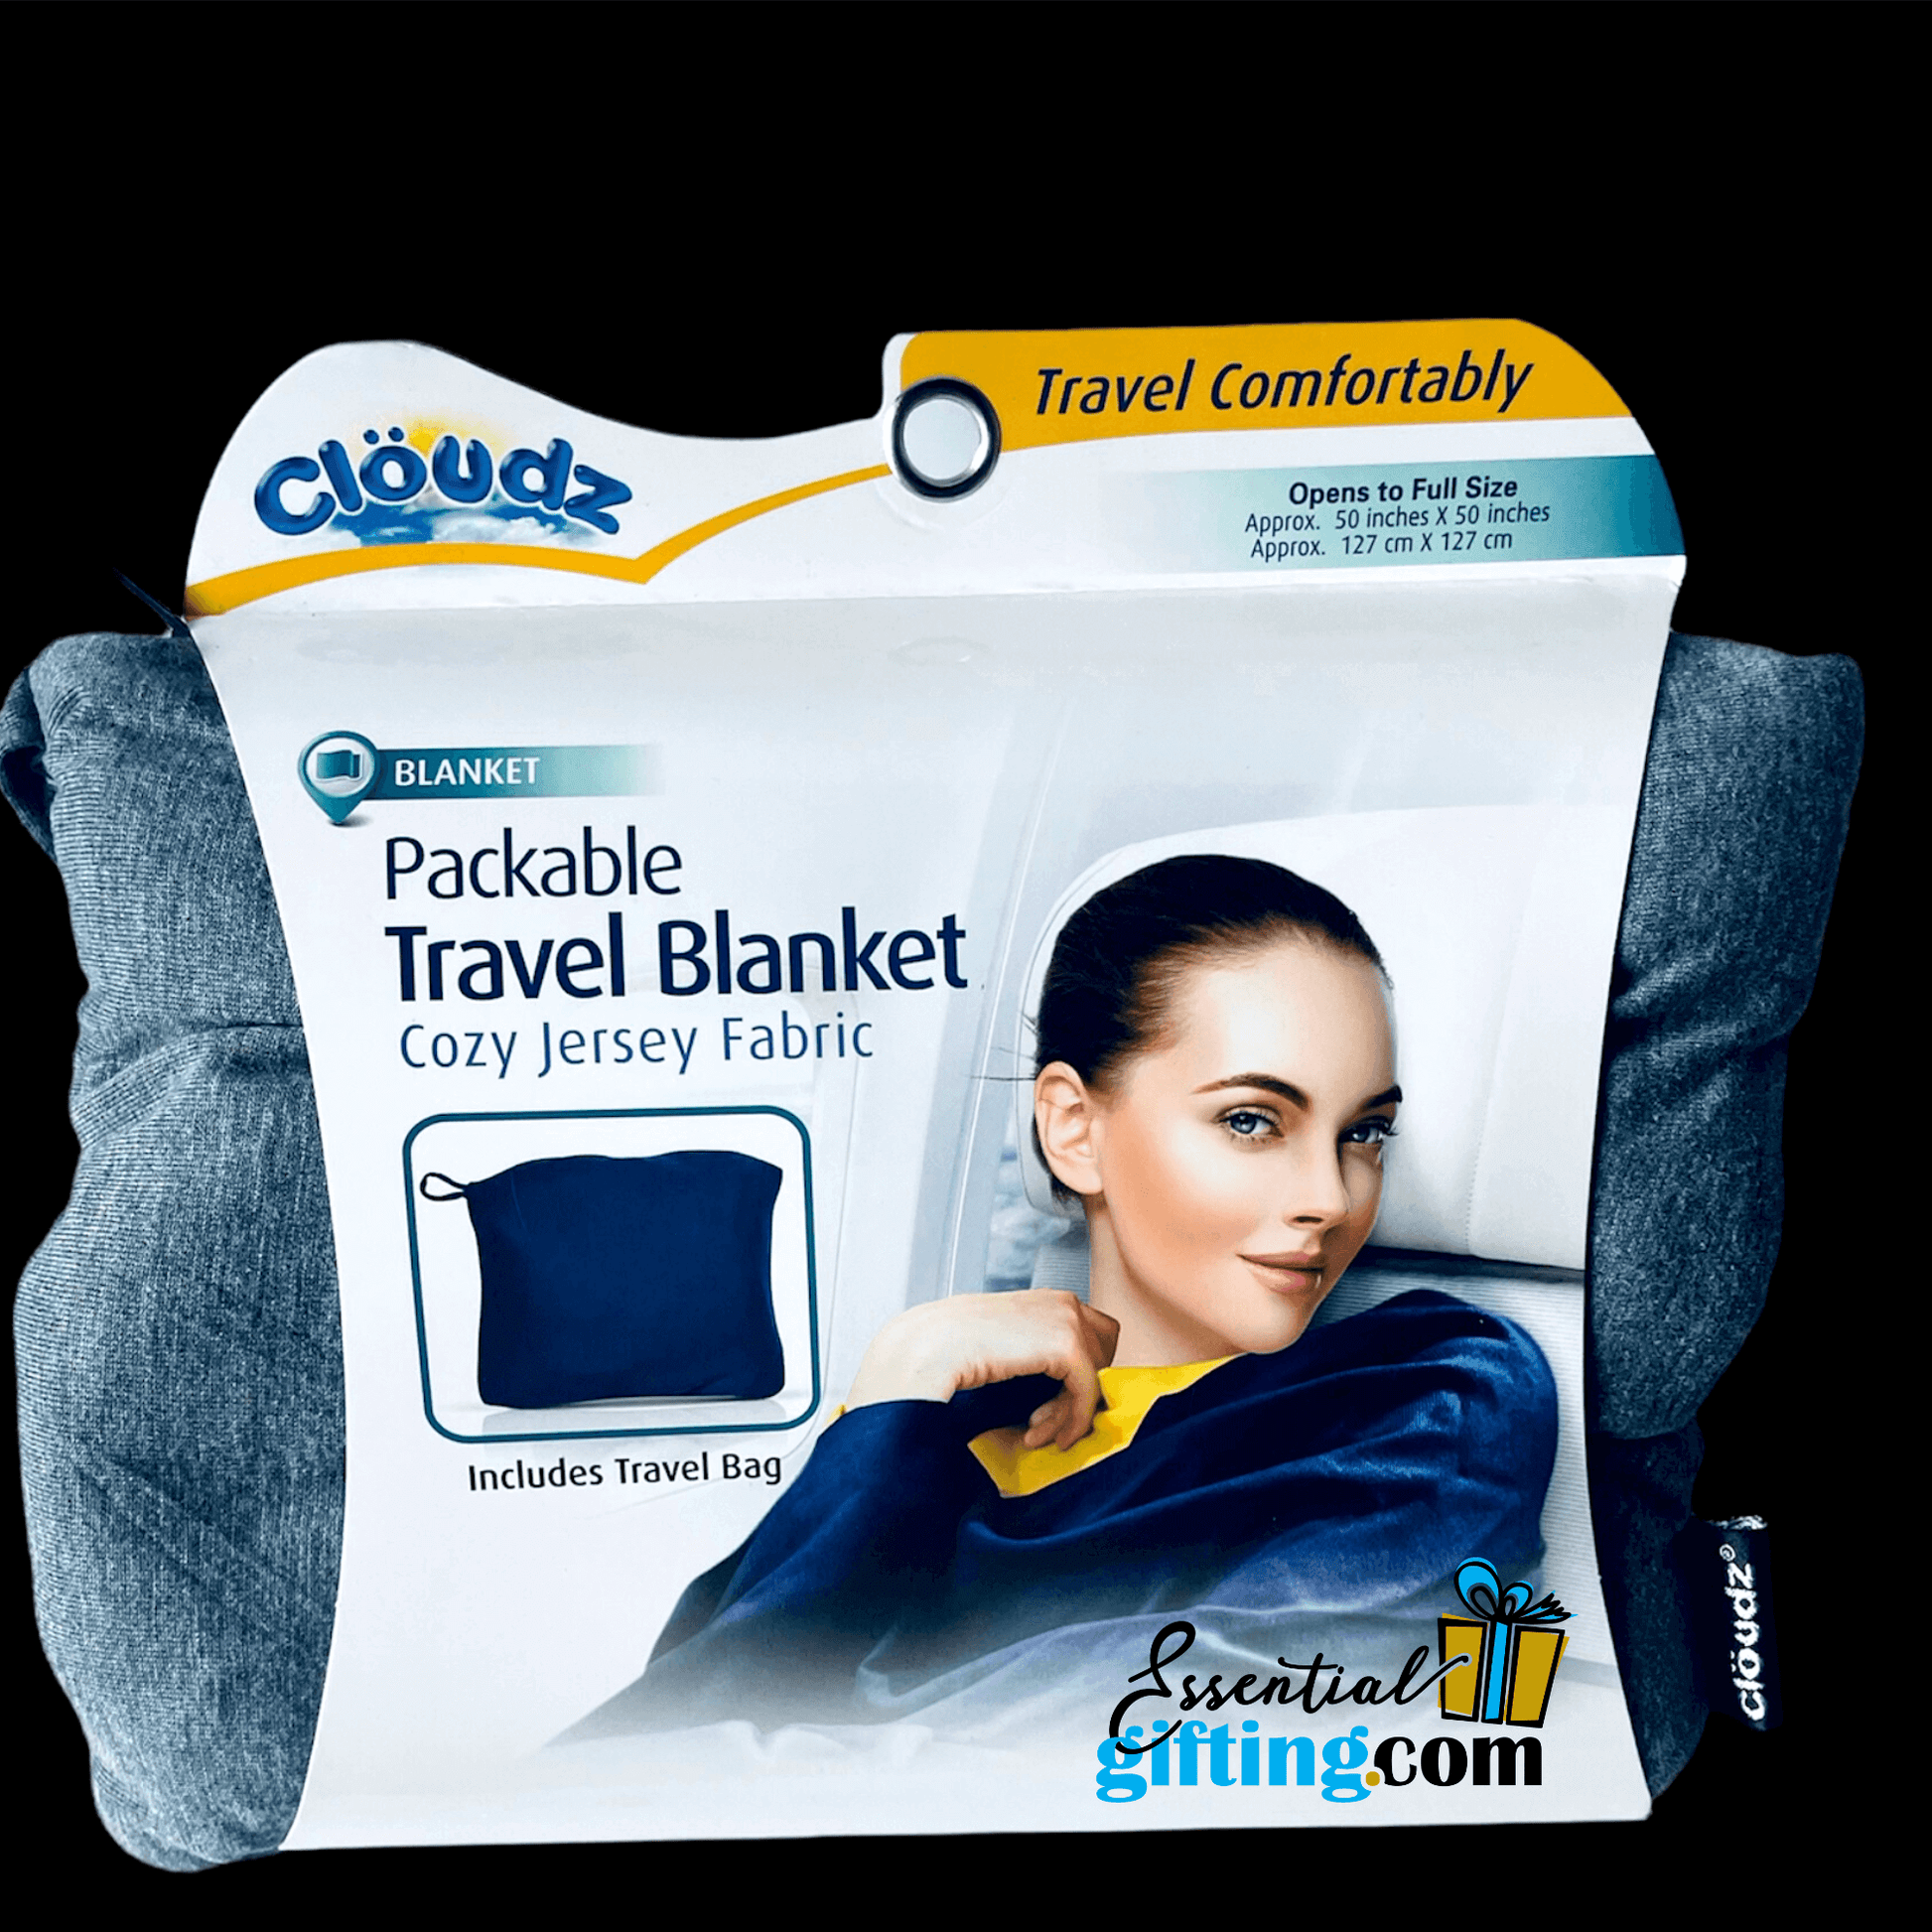 Cozy travel blanket in navy blue, packable for comfortable journeys.